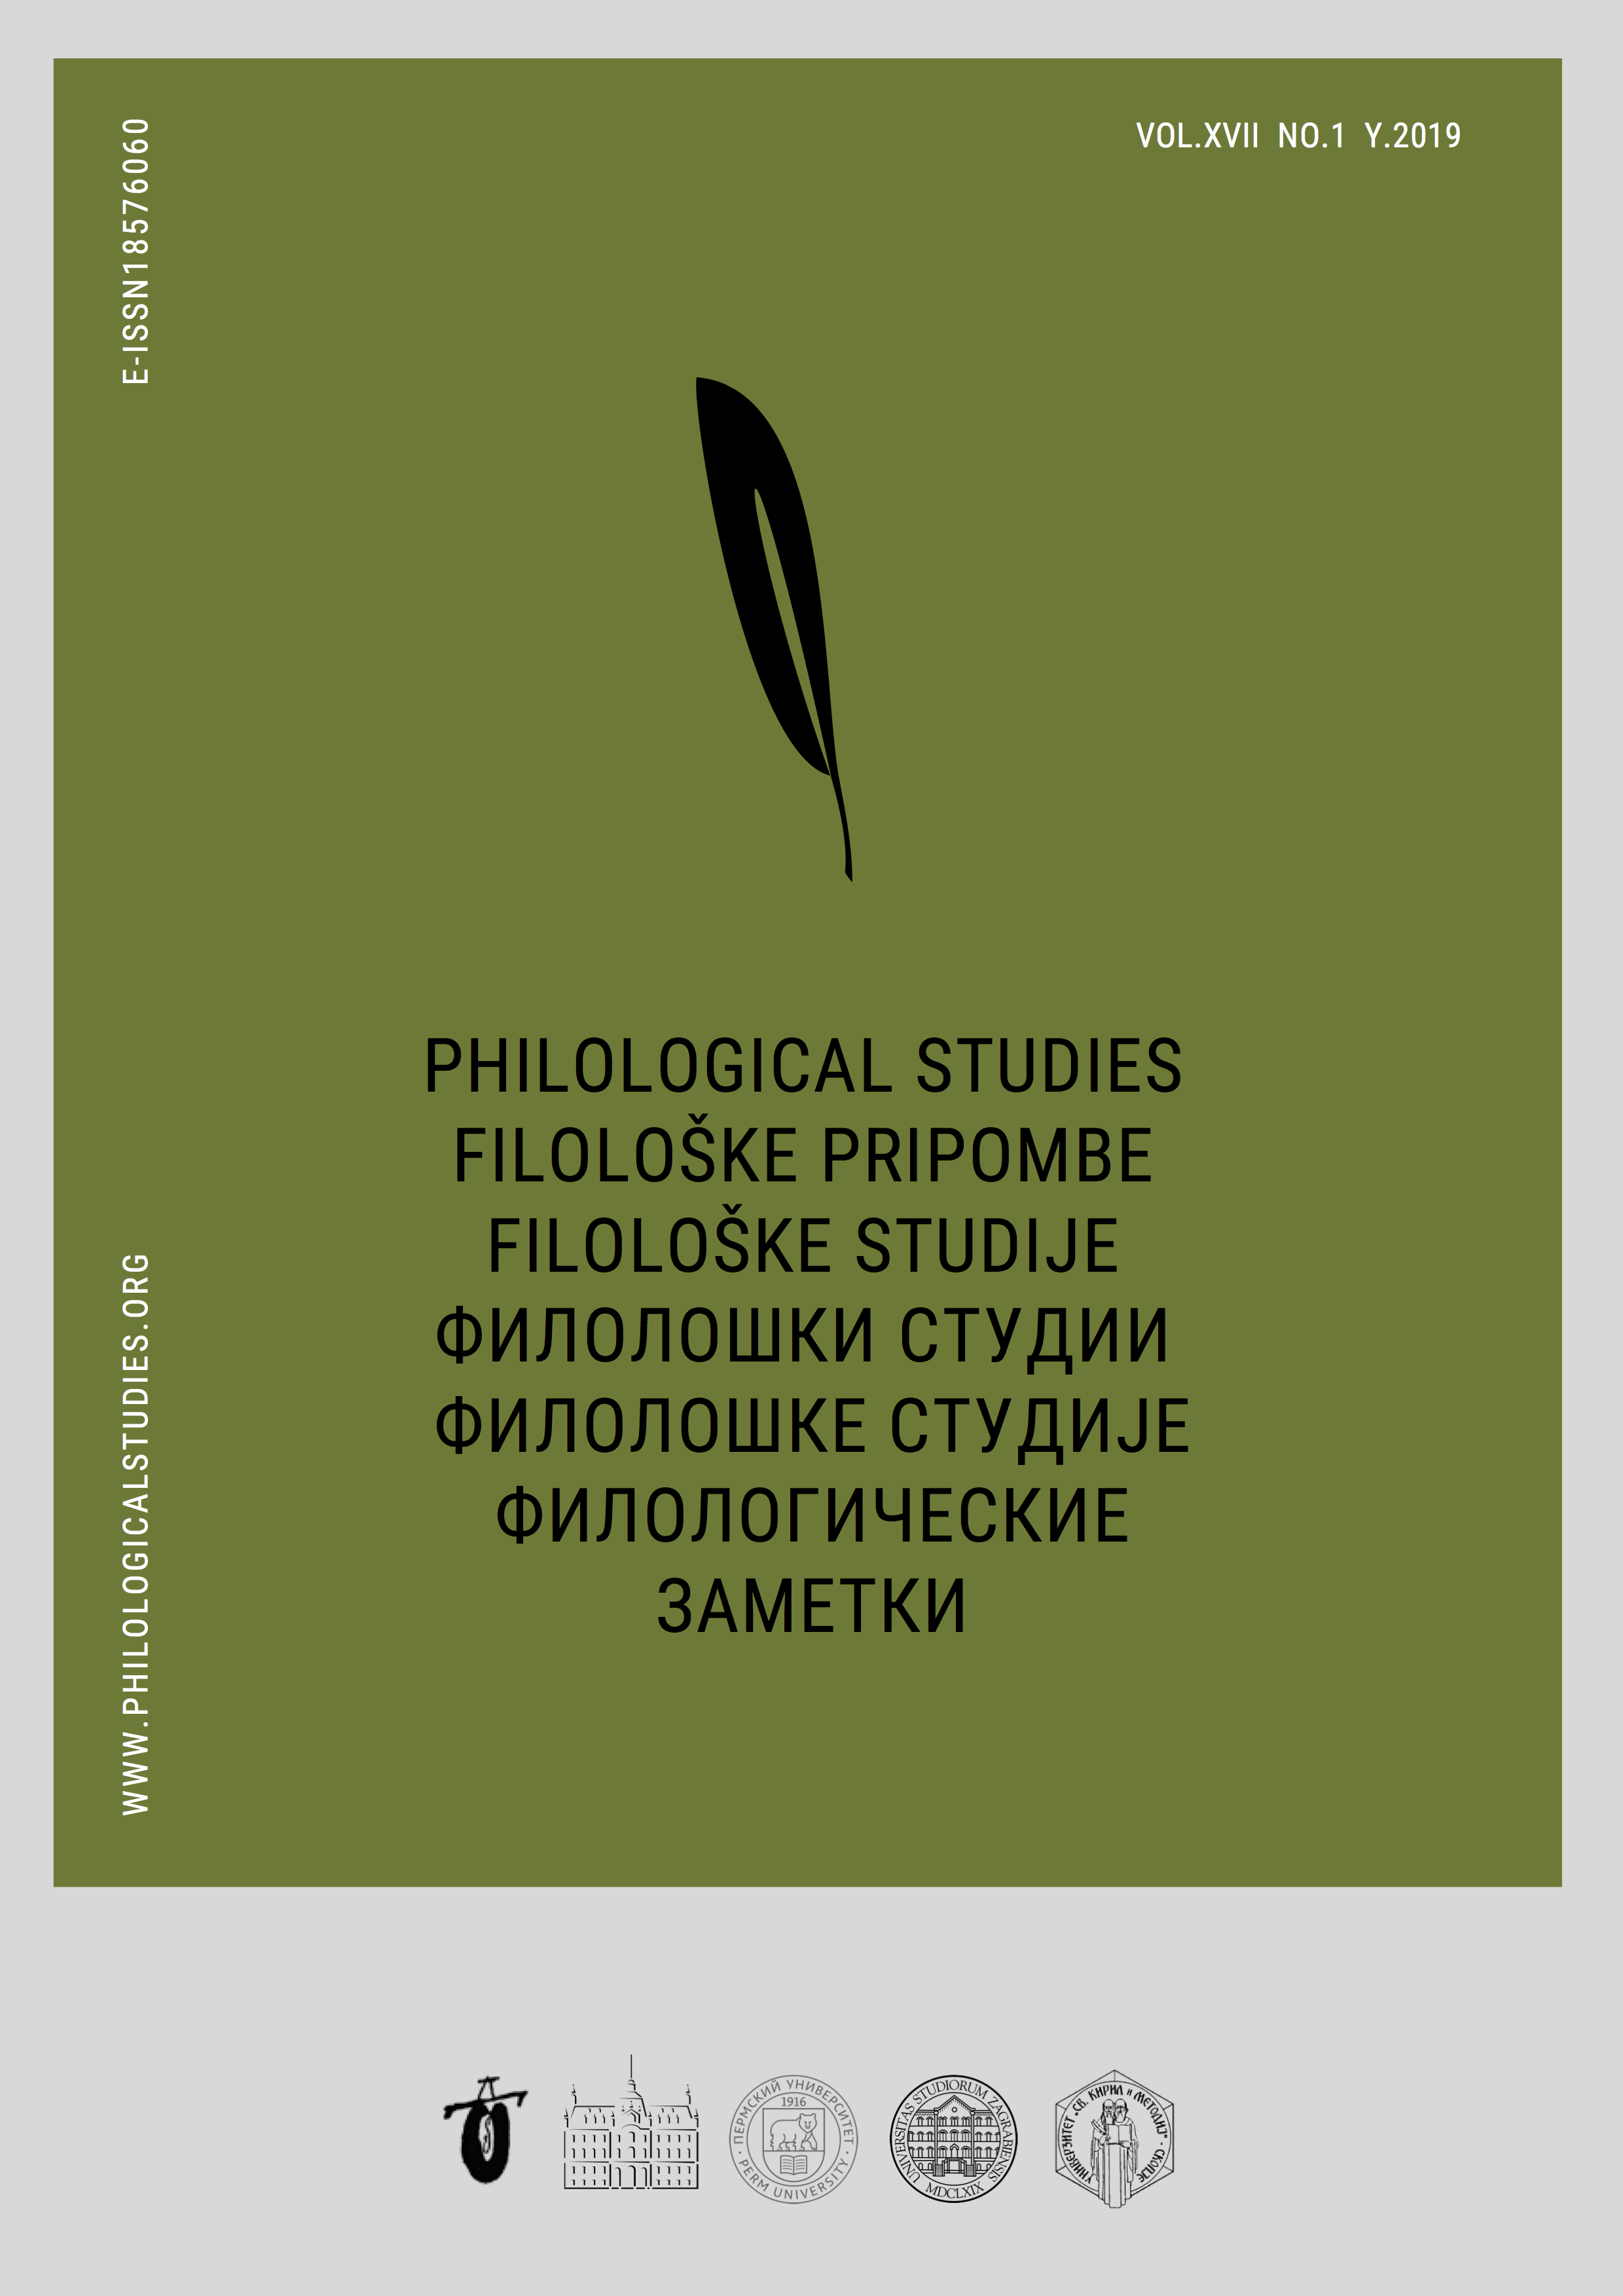 Philological Studies Vol.17 No.1 2019